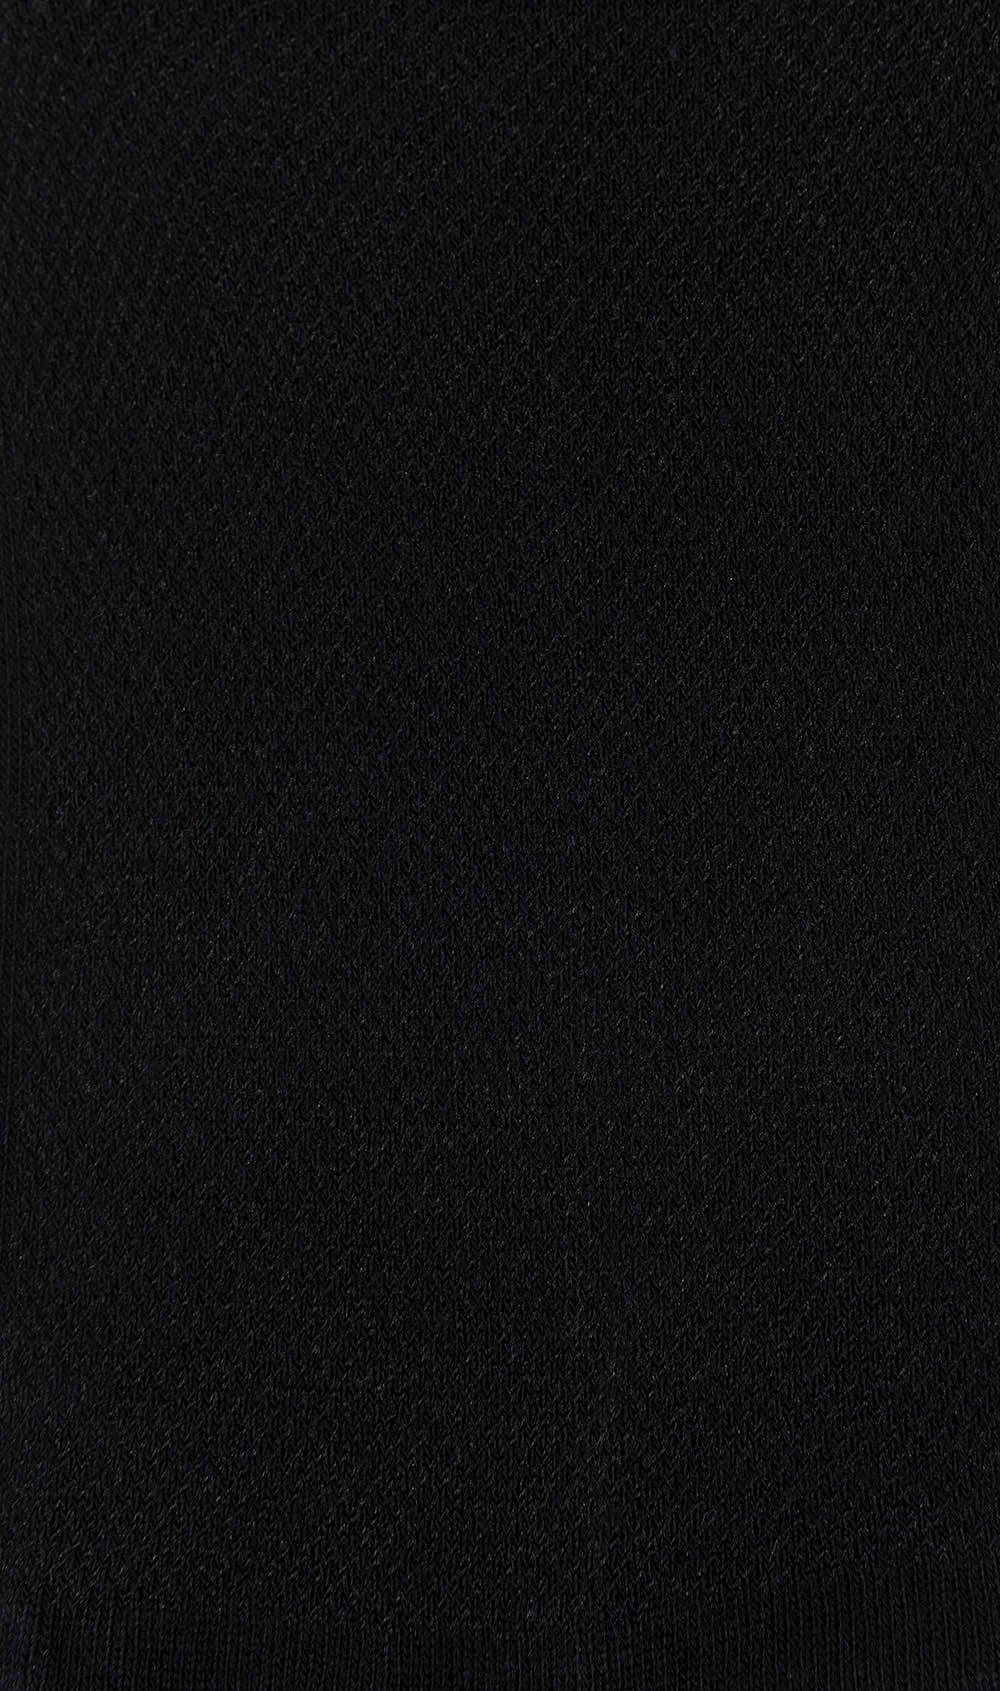 Bond Black Low-Cut Socks Pattern